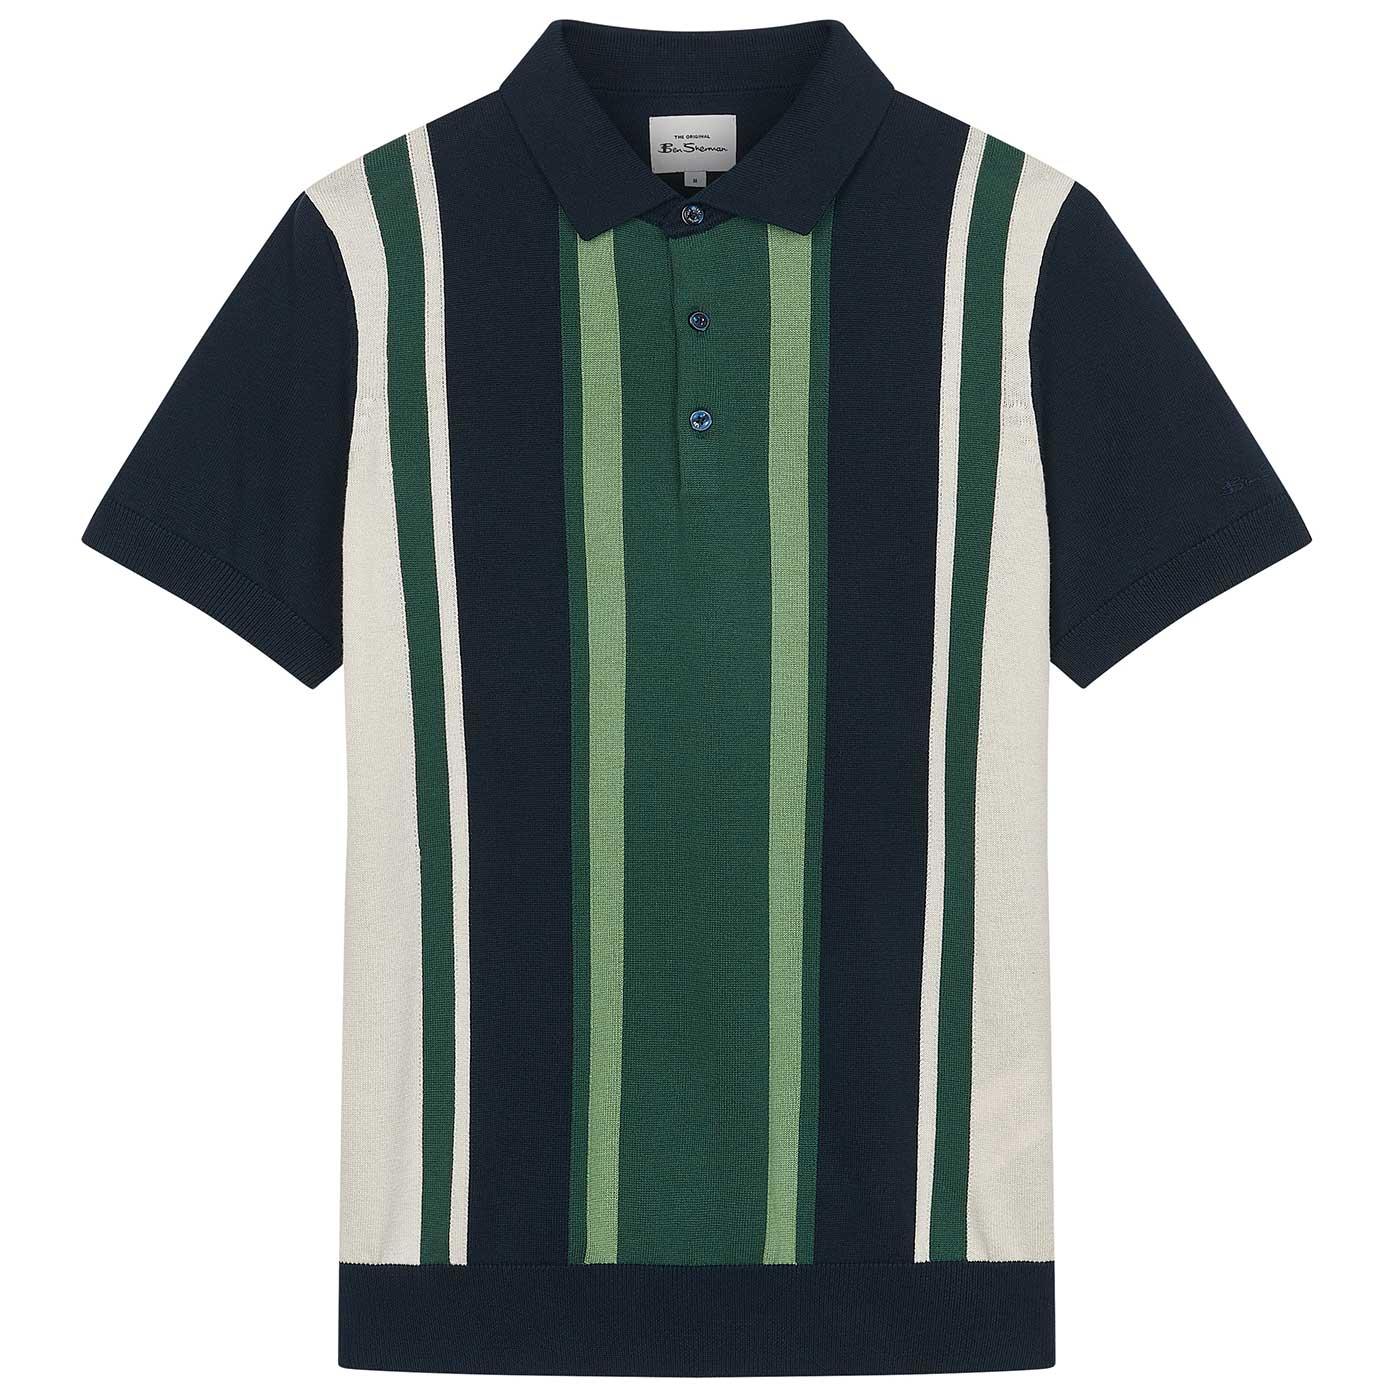 Ben Sherman Vertical Stripe Knitted Polo Shirt DN